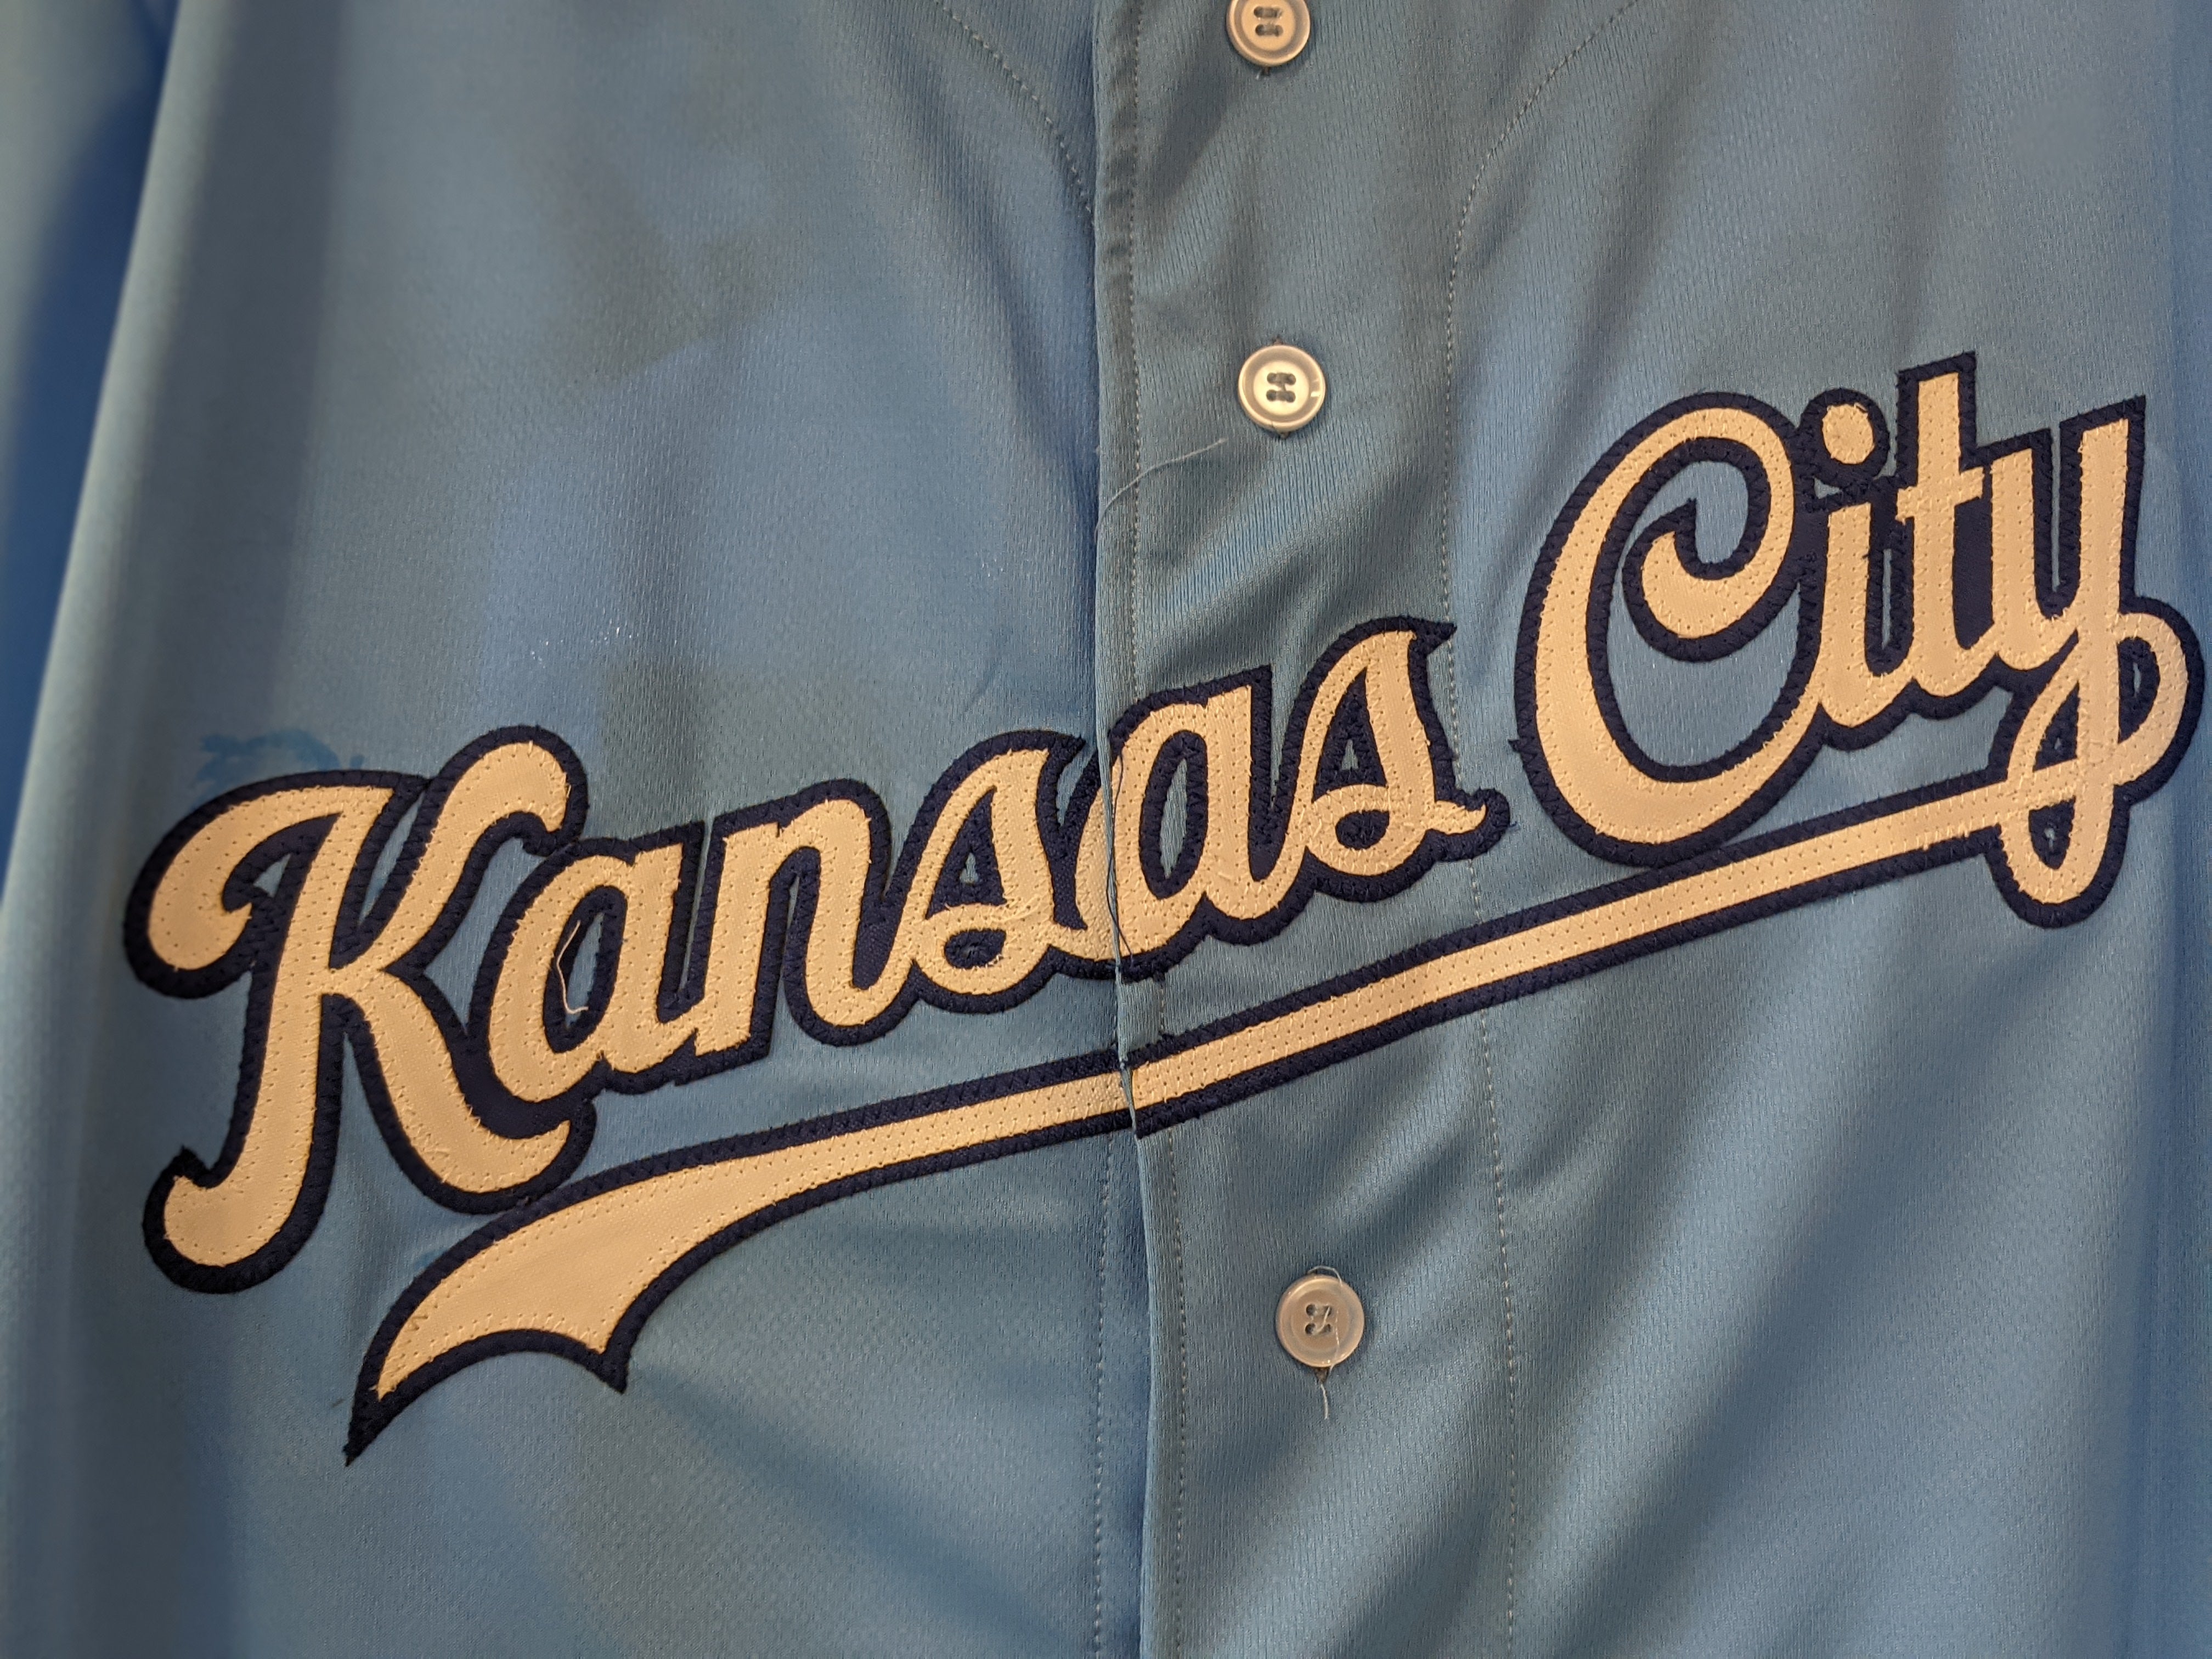 Kansas City Royals reveal throwback Opening Day uniforms